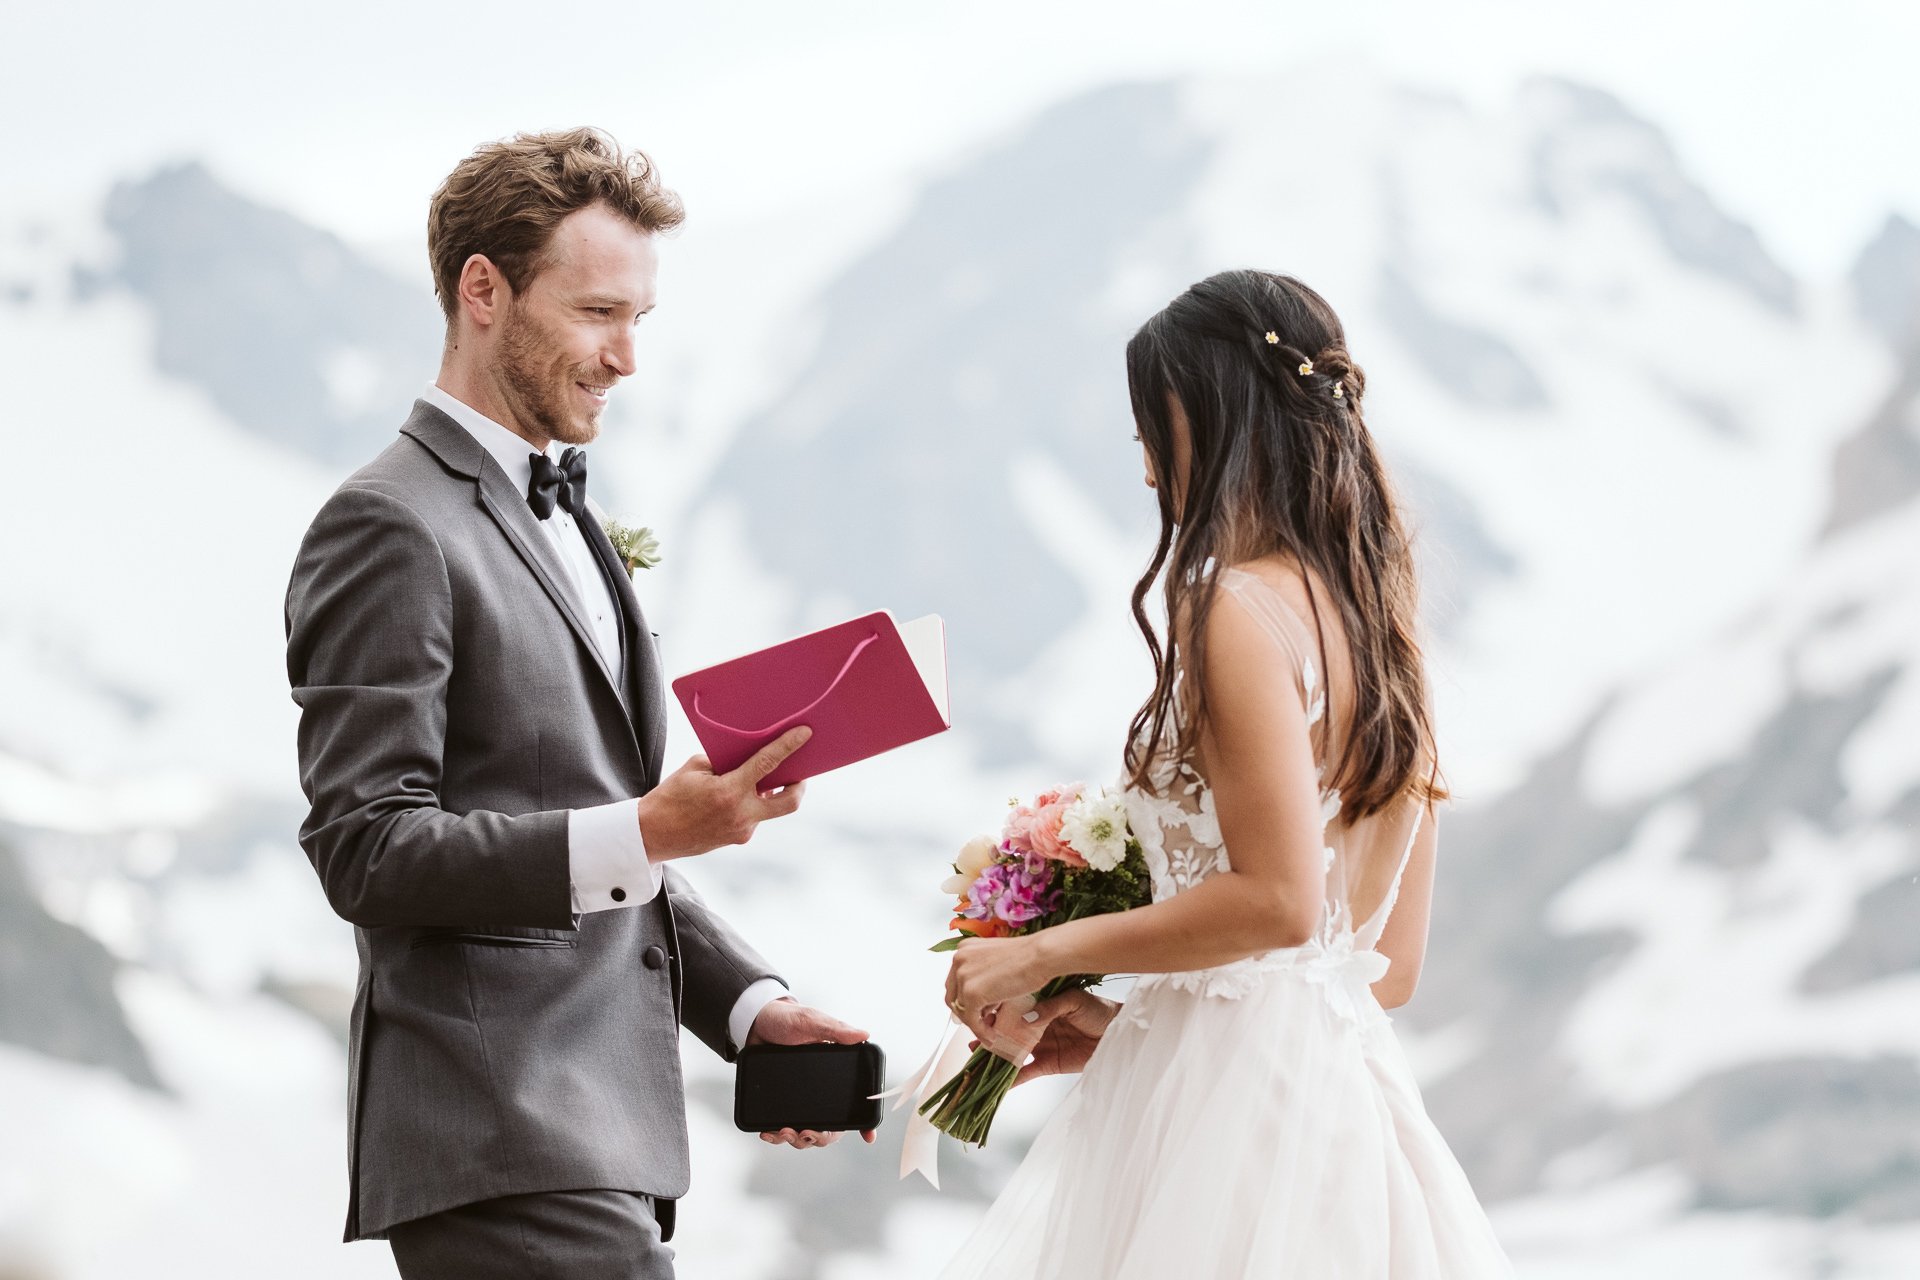 Indian Peaks Wilderness elopement, Colorado adventure elopement photographer, mountain elopement ceremony at alpine lake